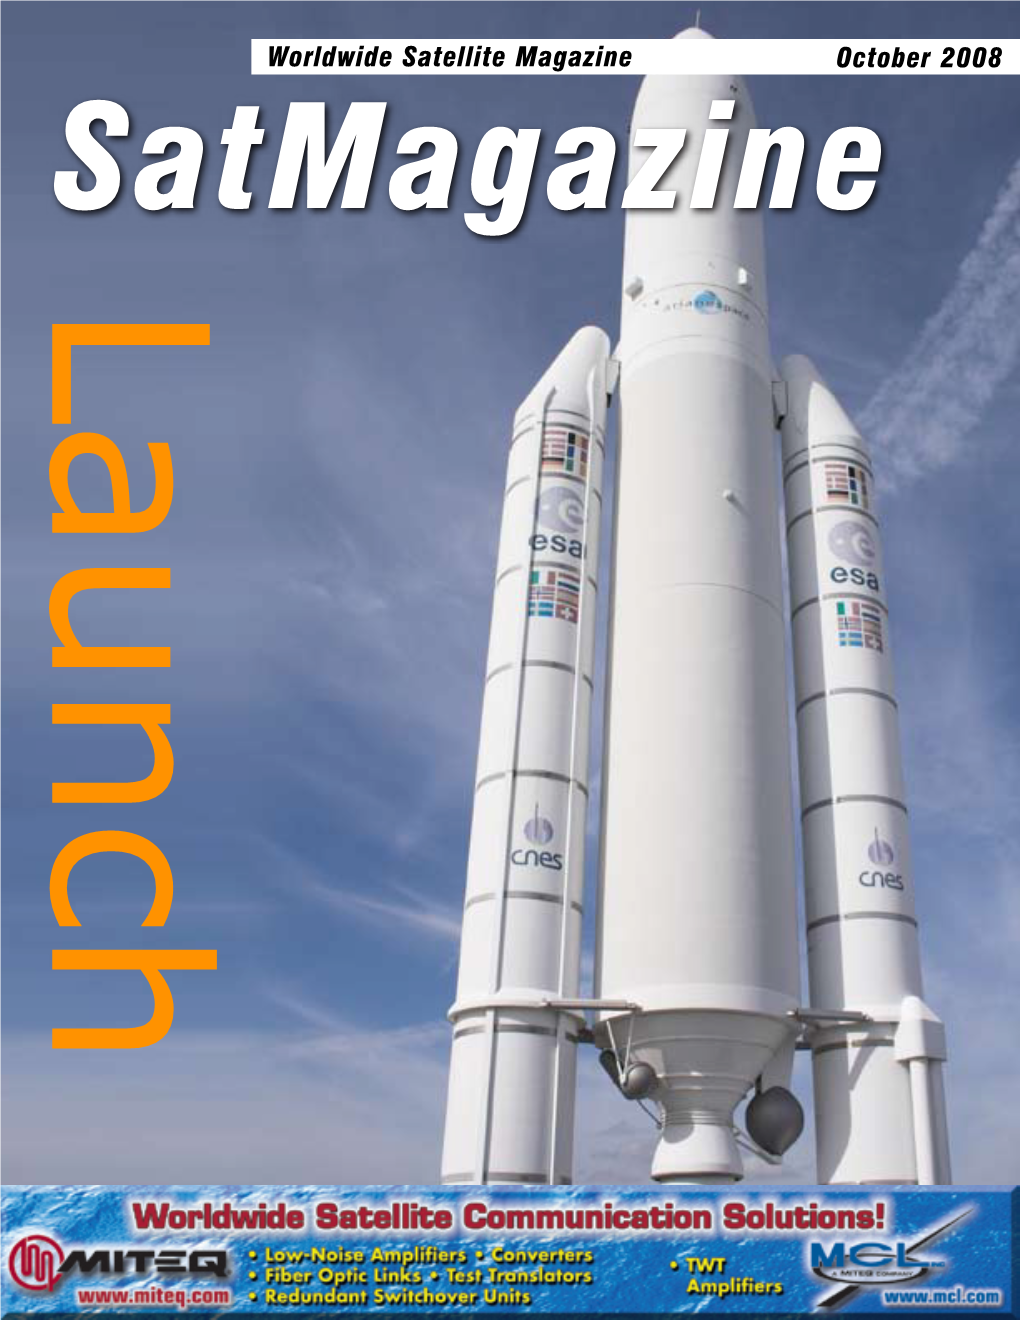 Worldwide Satellite Magazine October 2008 Satmagazine L a U N C H 2 Satmagazine — October 2008 Vol